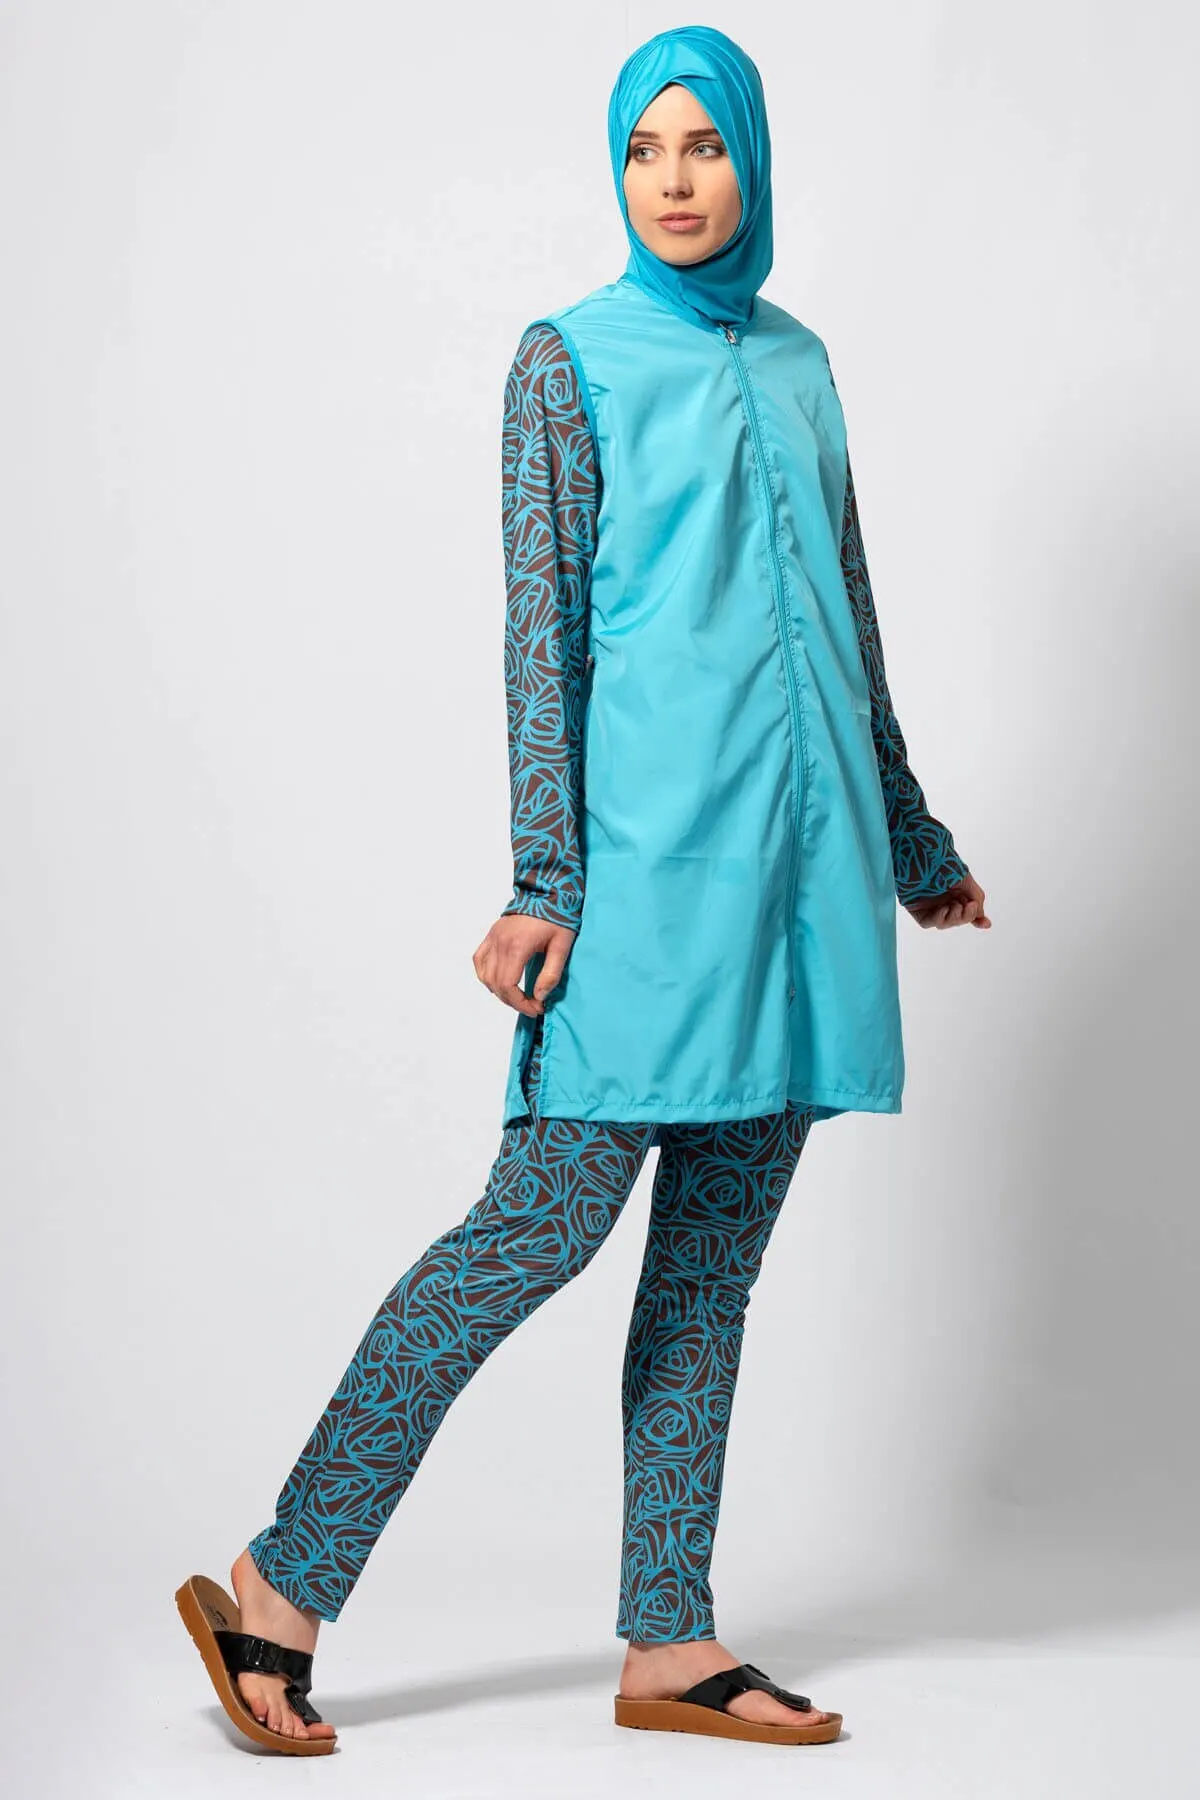 

Muslim Burkinis Turquoise Fully Covered Swimwear fashion Summer Clothing Hijab Sport Swimsuit Islamic Full Cover